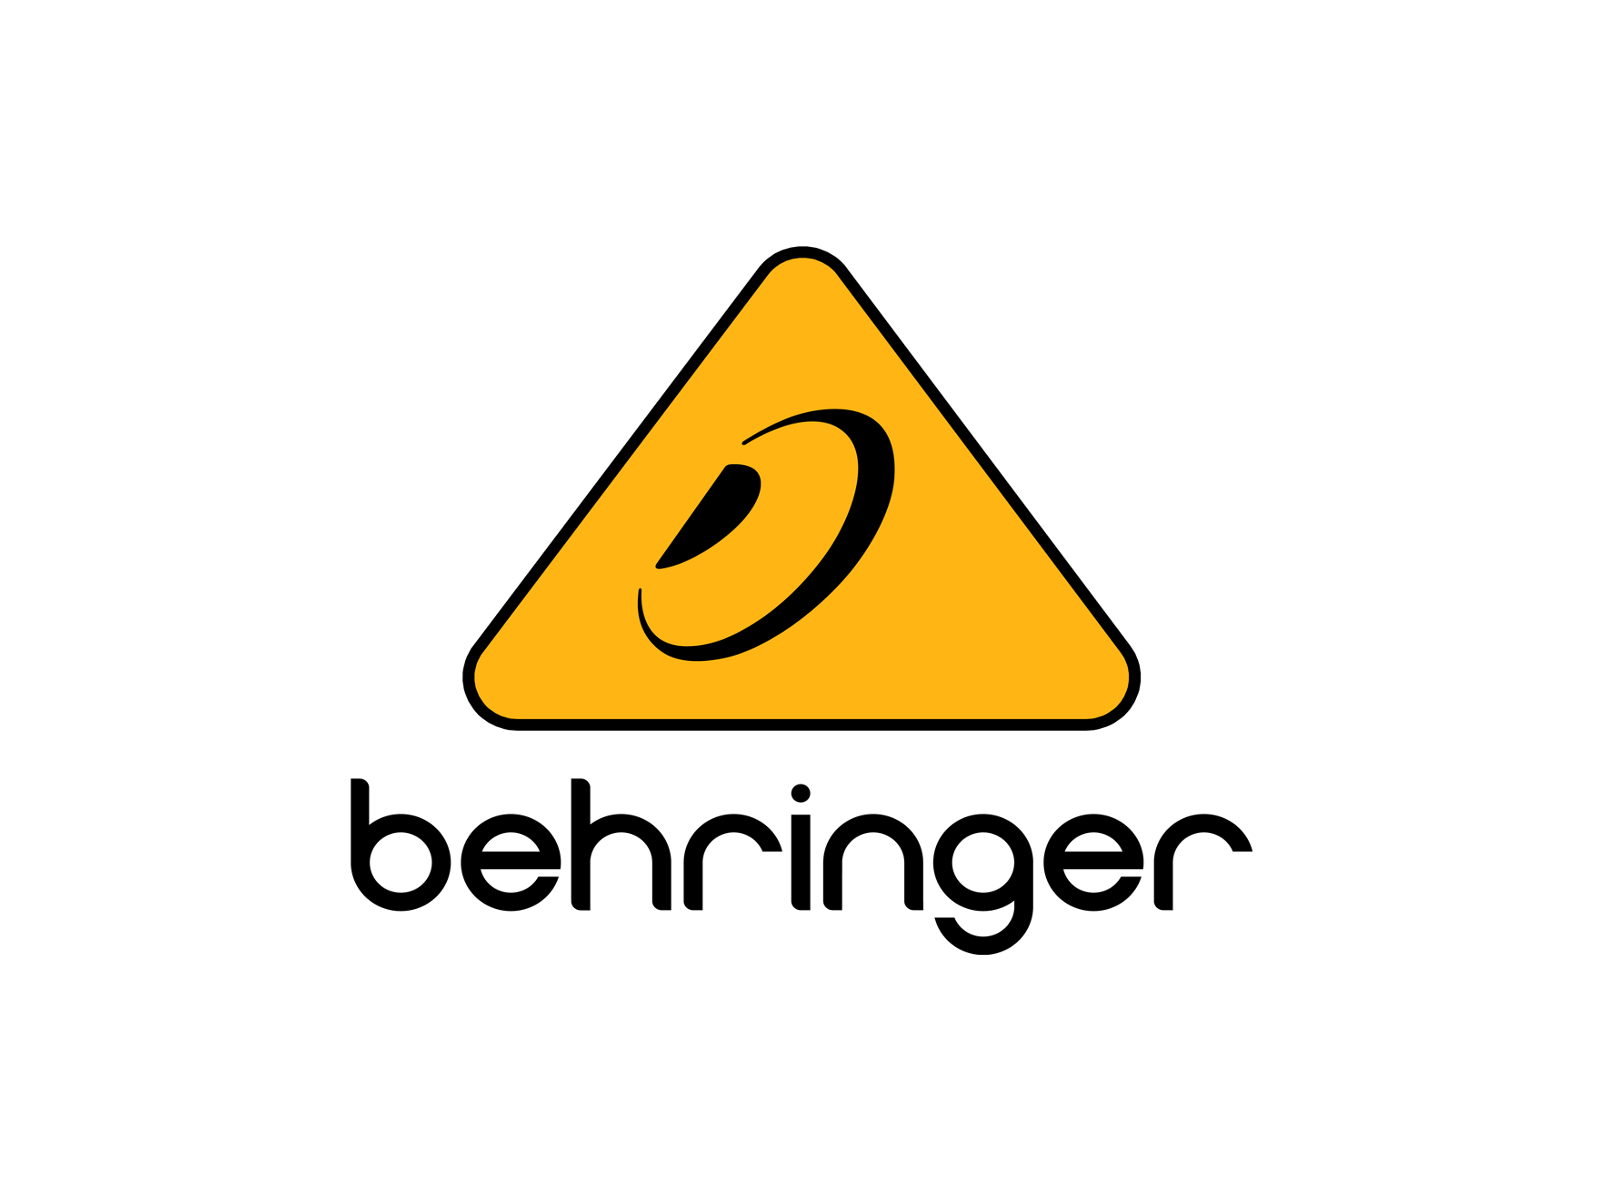 Behringer X77-00000-98948 НЧ динамик TS-18SW2000A6 для B1800XP, iQ18B